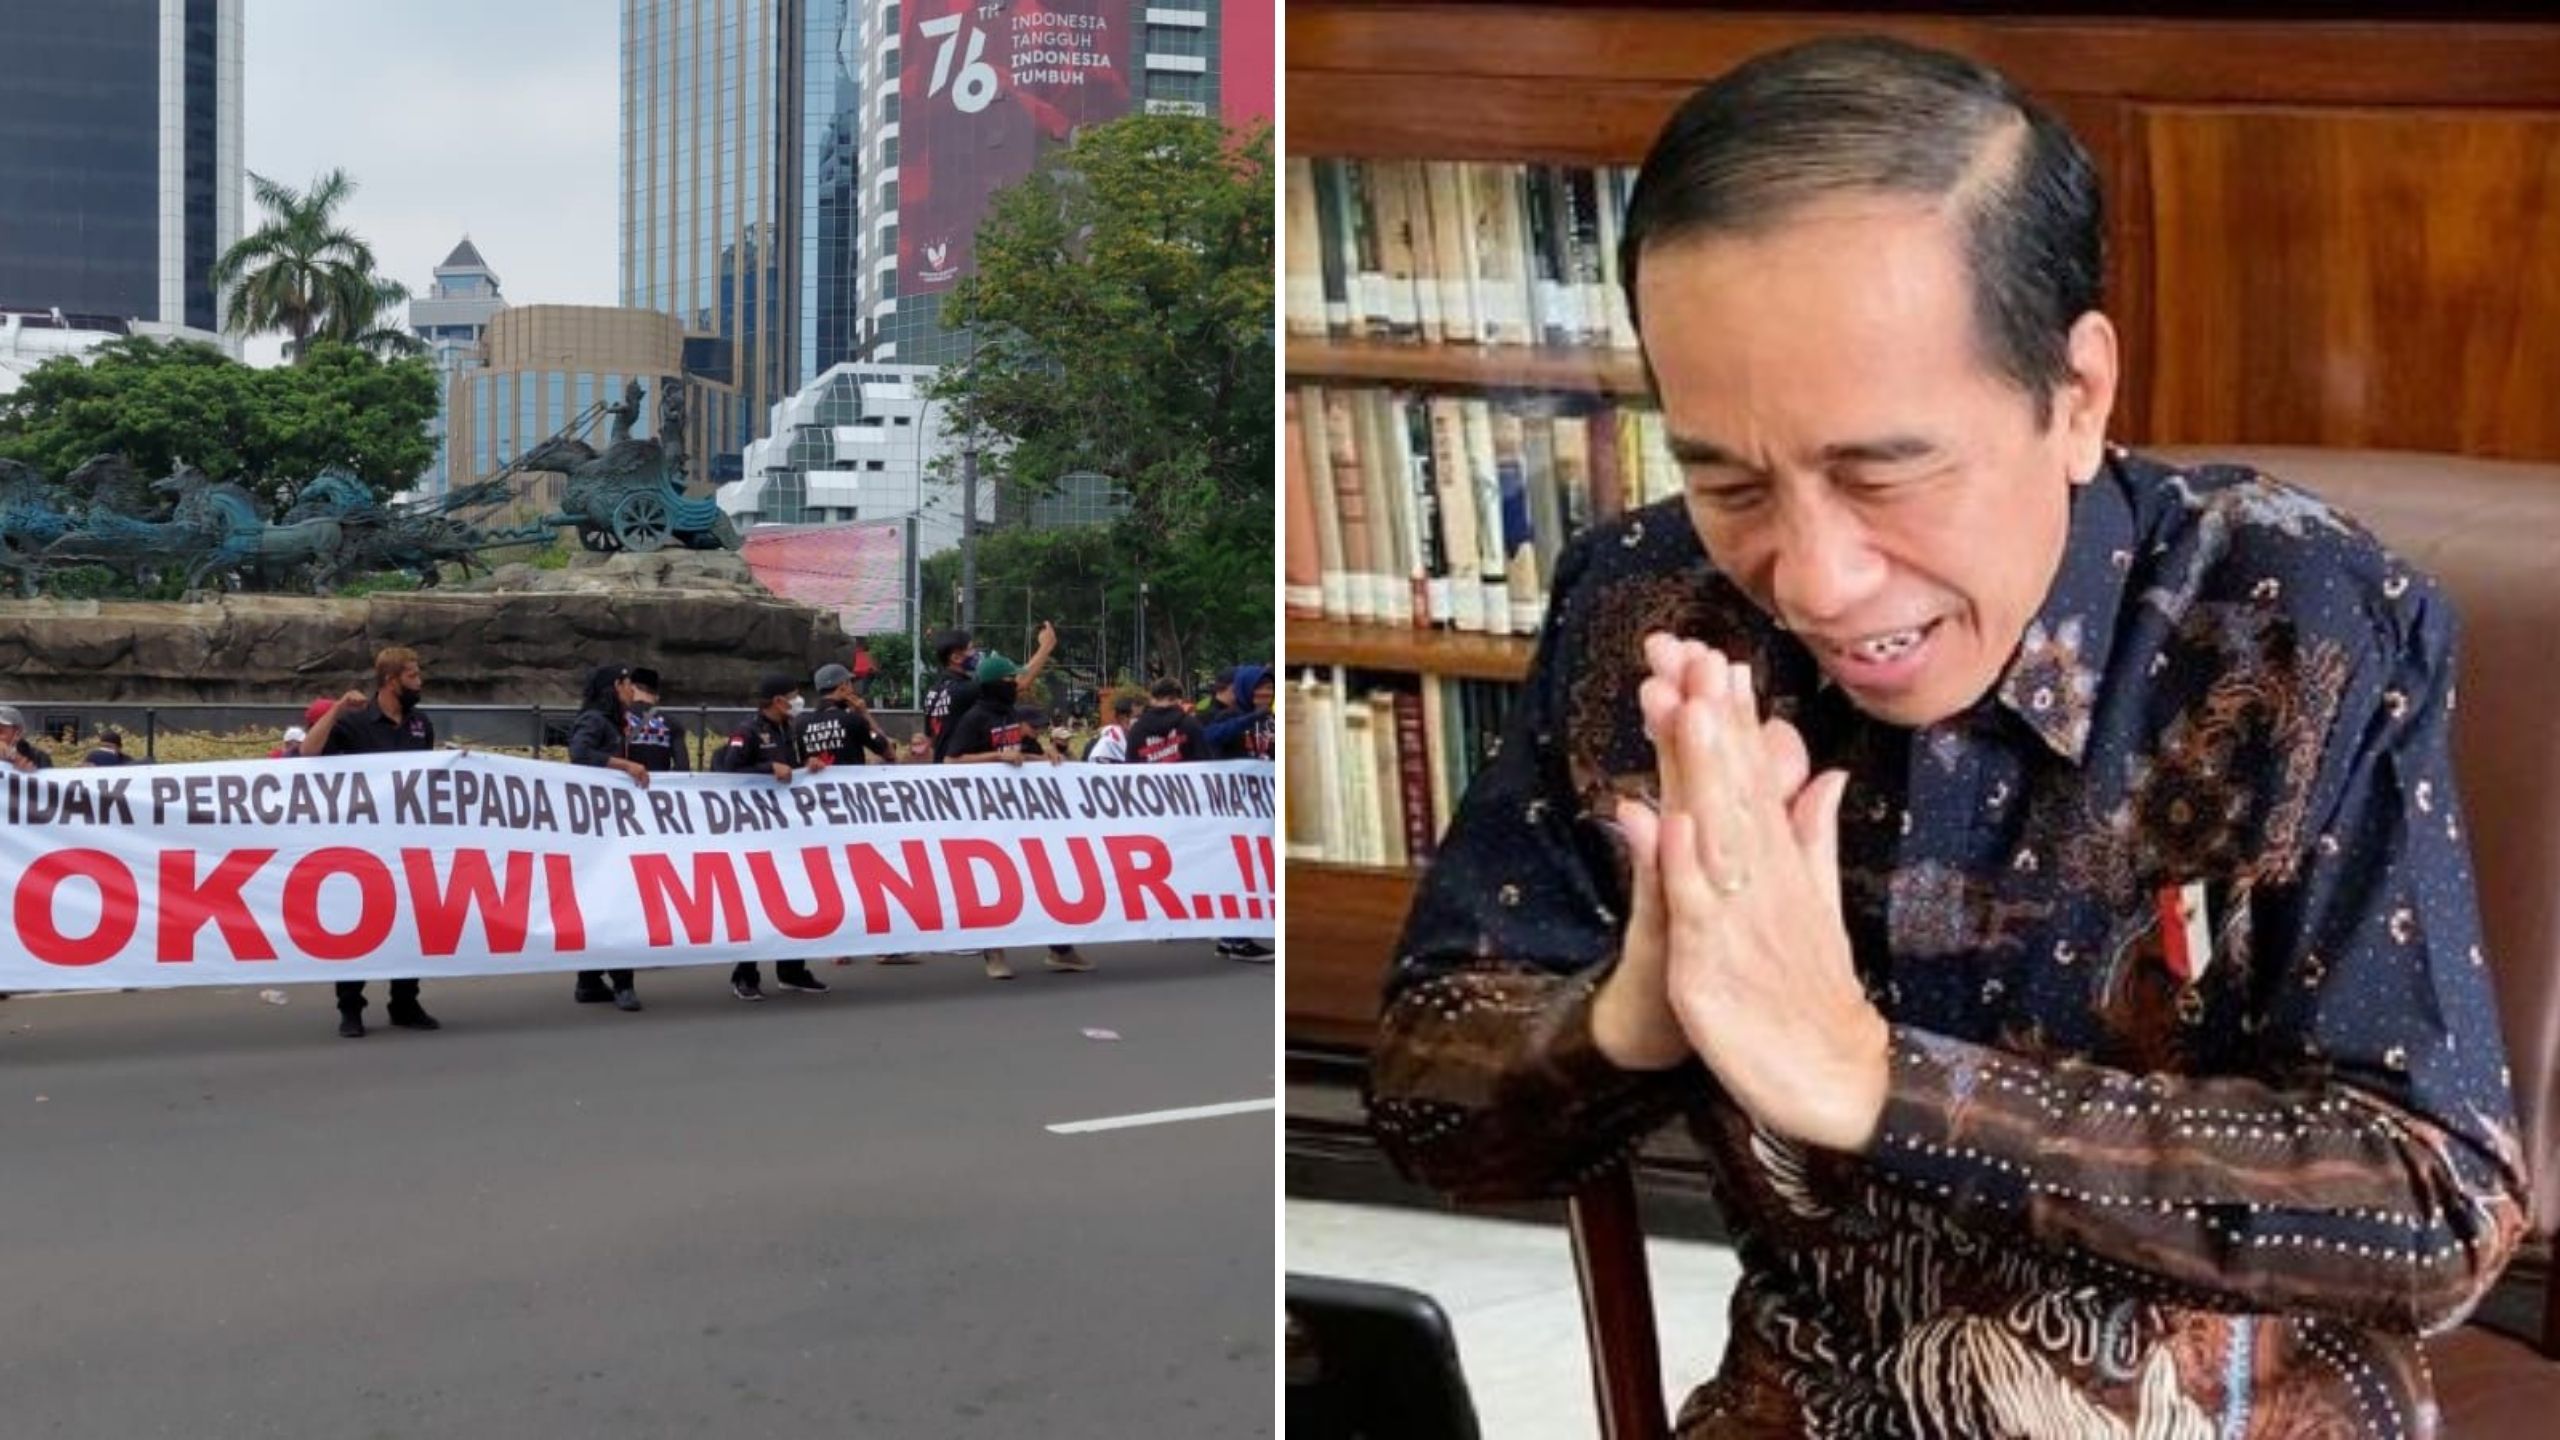 Survei SMRC: Rakyat Mulai Tidak Puas Dengan Kinerja Jokowi Selama 3 Bulan Terakhir